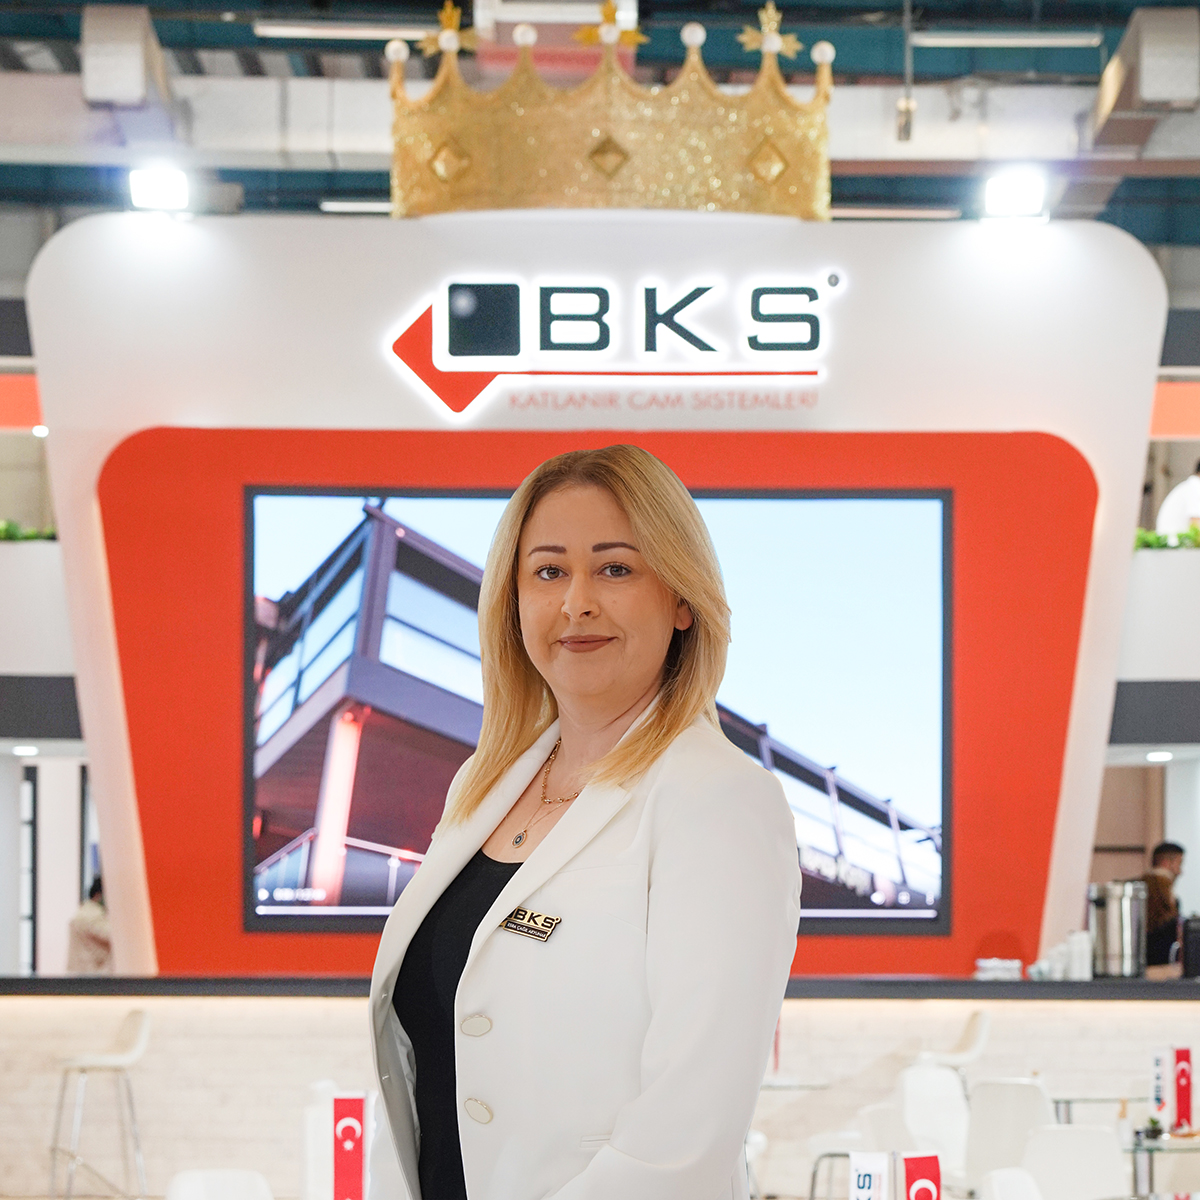 BKS Turkey Sales Executive